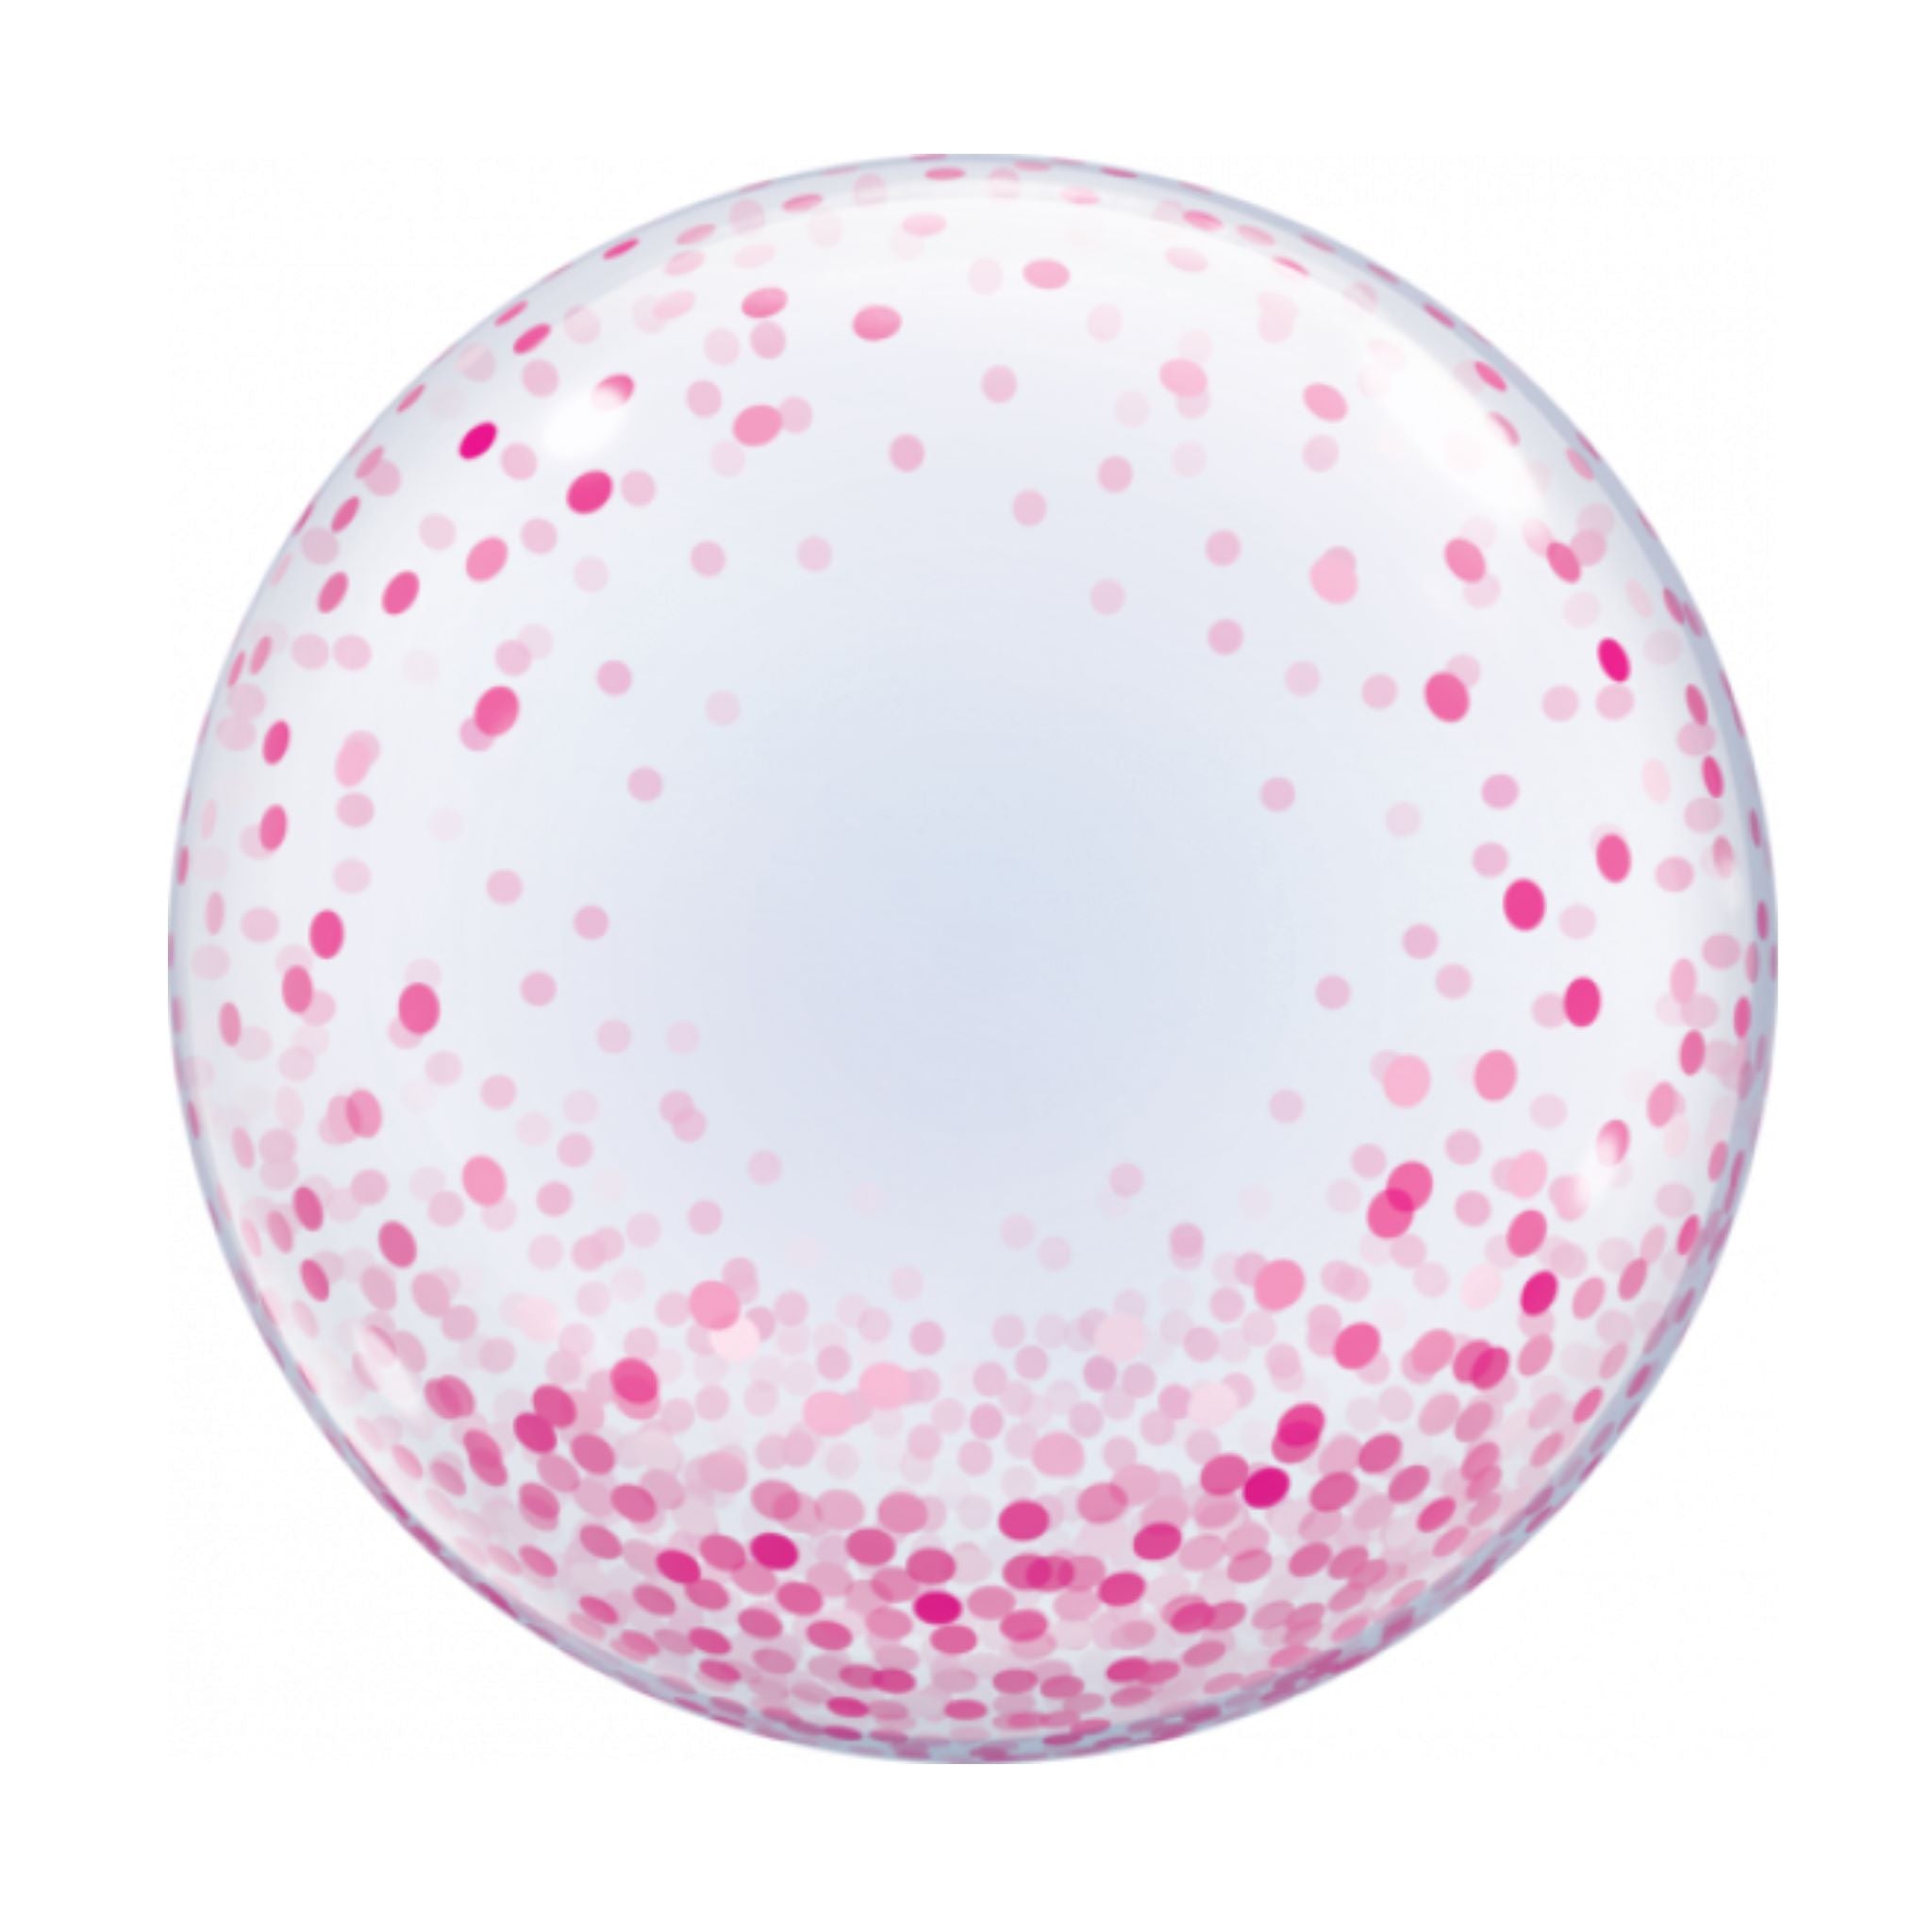 Balloon - Clearz and Bubble Balloon